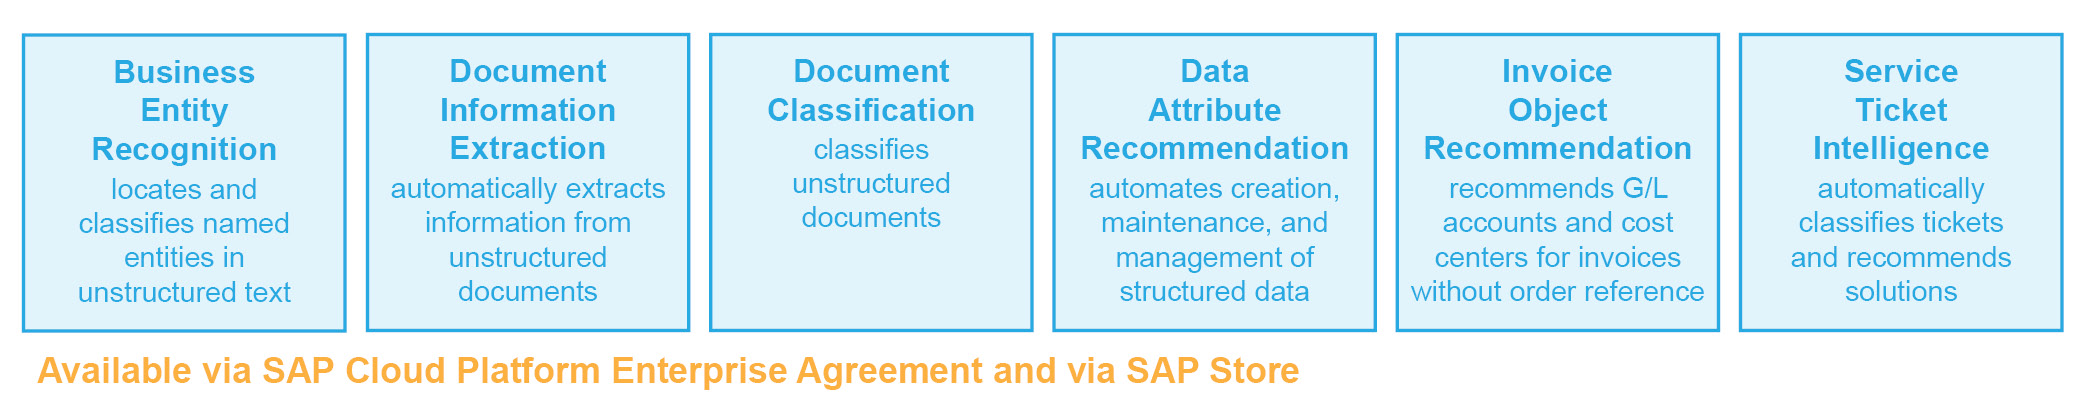 Figure 1 — The SAP AI Business Services portfolio consists of services that are designed to solve concrete business problems